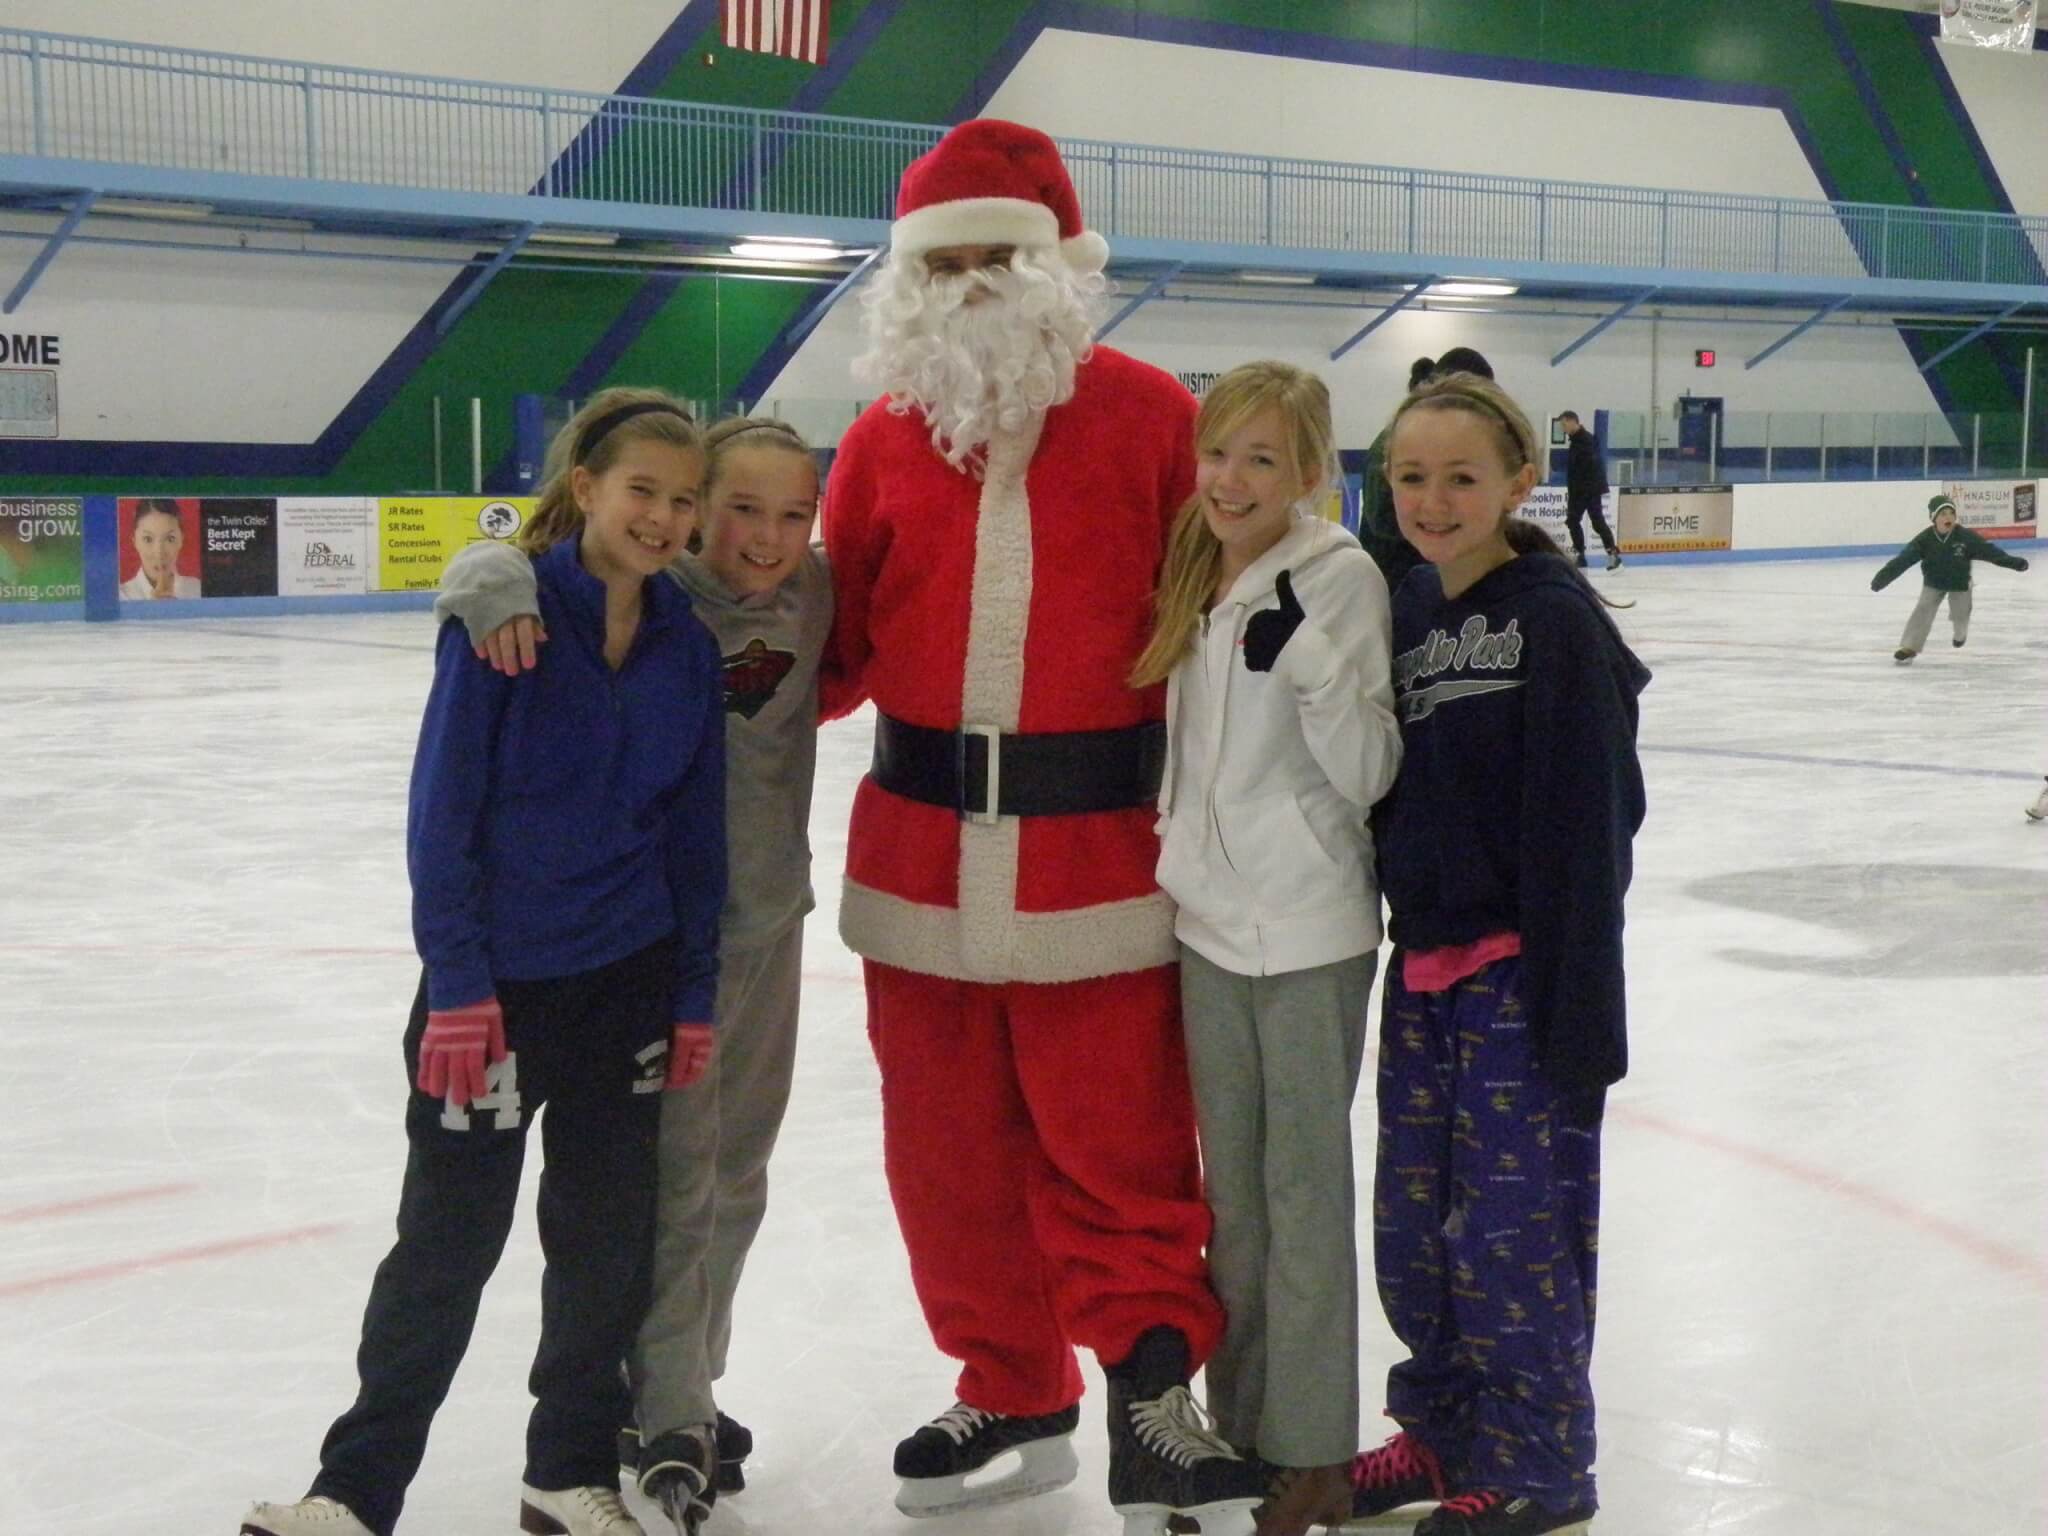 Kids ice skating with Santa Claus